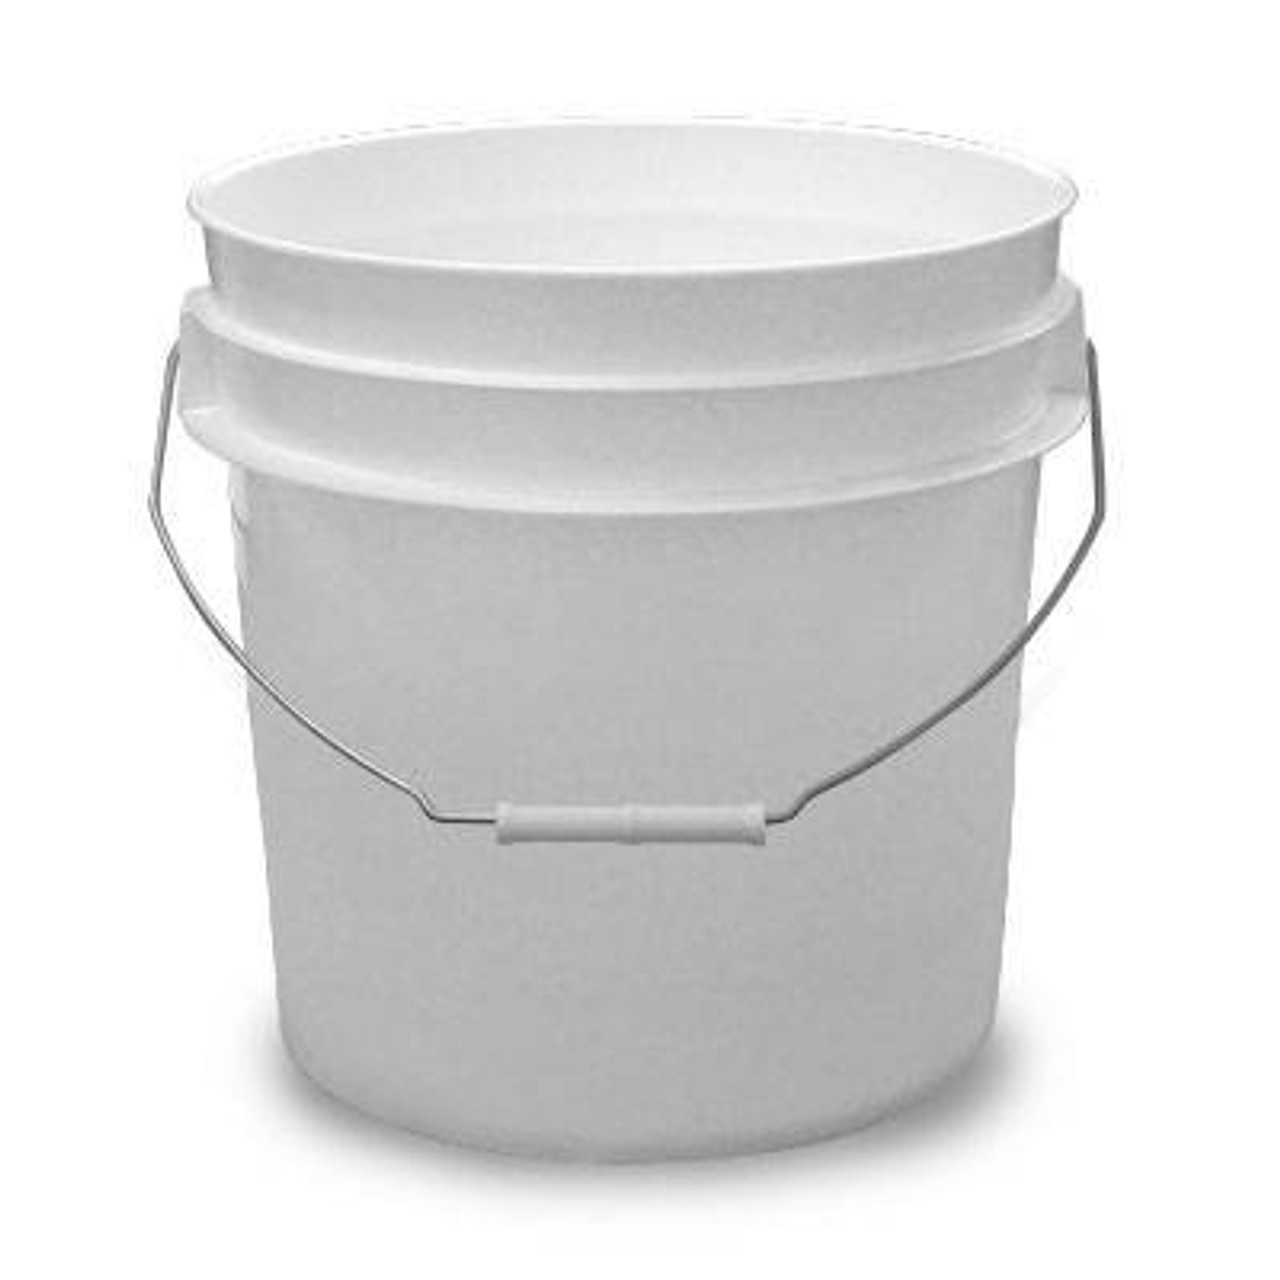  GLEAVI Stainless Steel Bucket 2 Gallon Bucket with Lid  Stainless Steel Water Bucket Pickup Bucket Small Bucket with Handle Milk  Barrel Milk Pail Metal Beverage Cabinet Household Plastic: Home & Kitchen